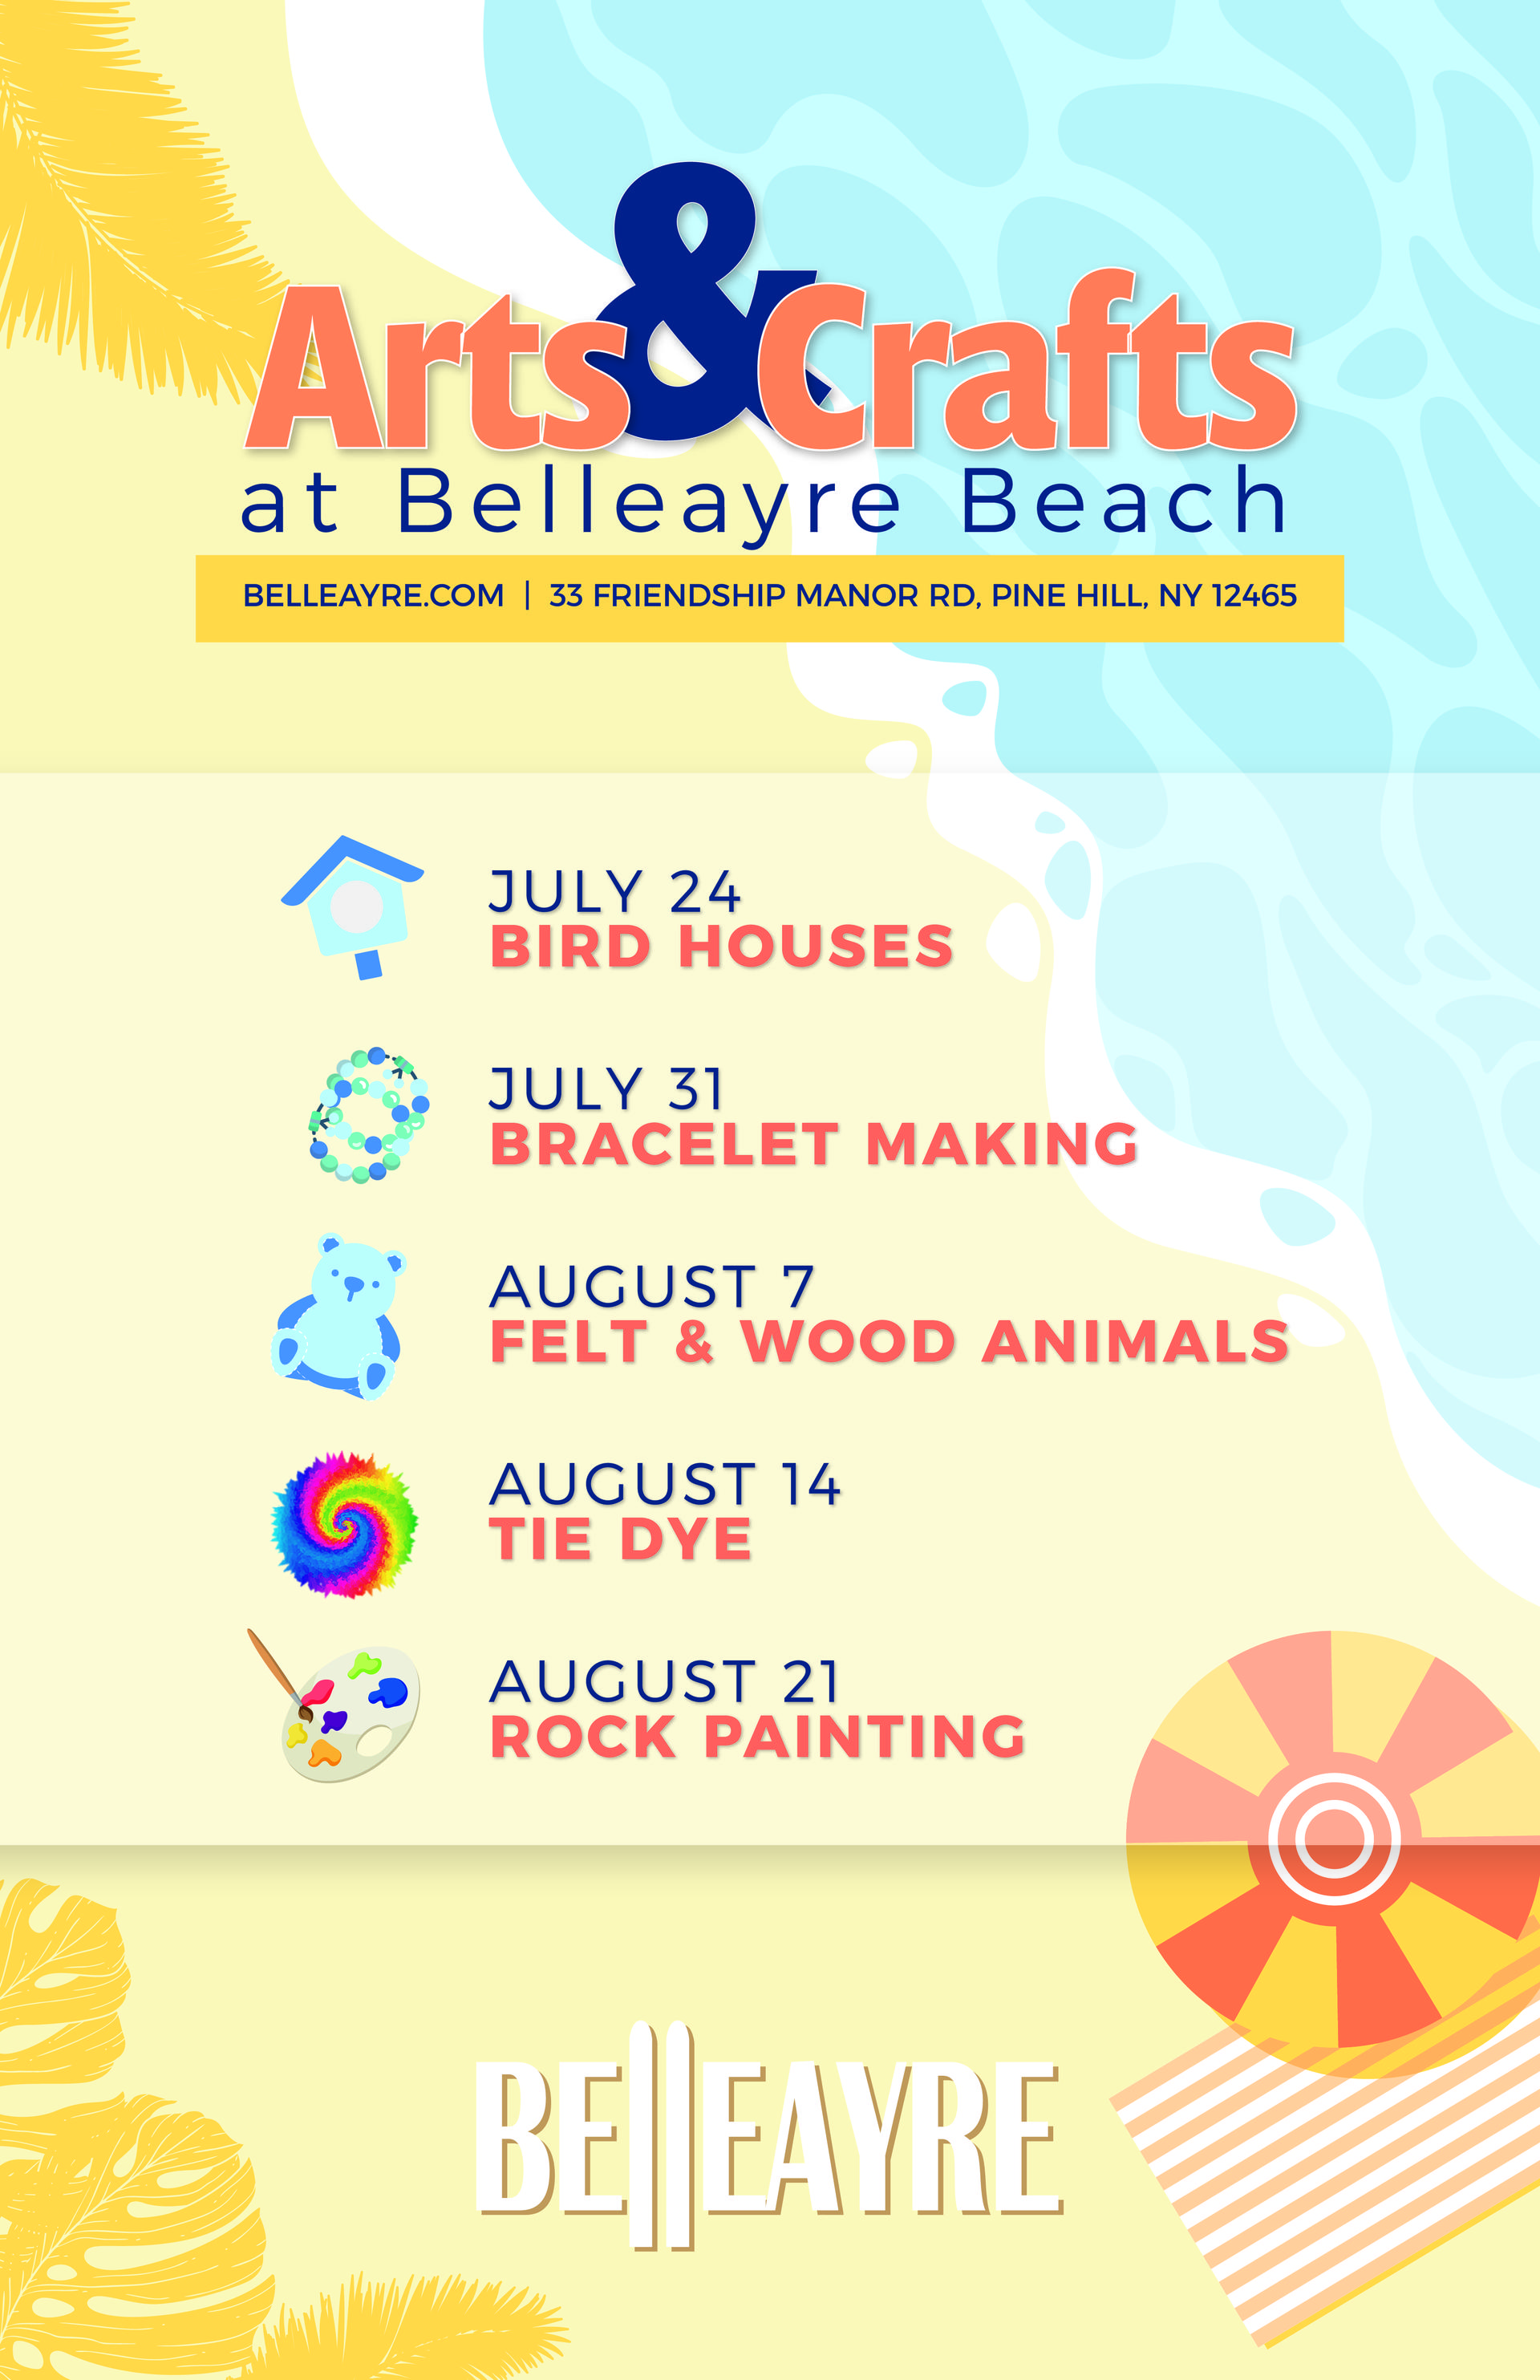 Arts & Crafts at Belleayre Beach